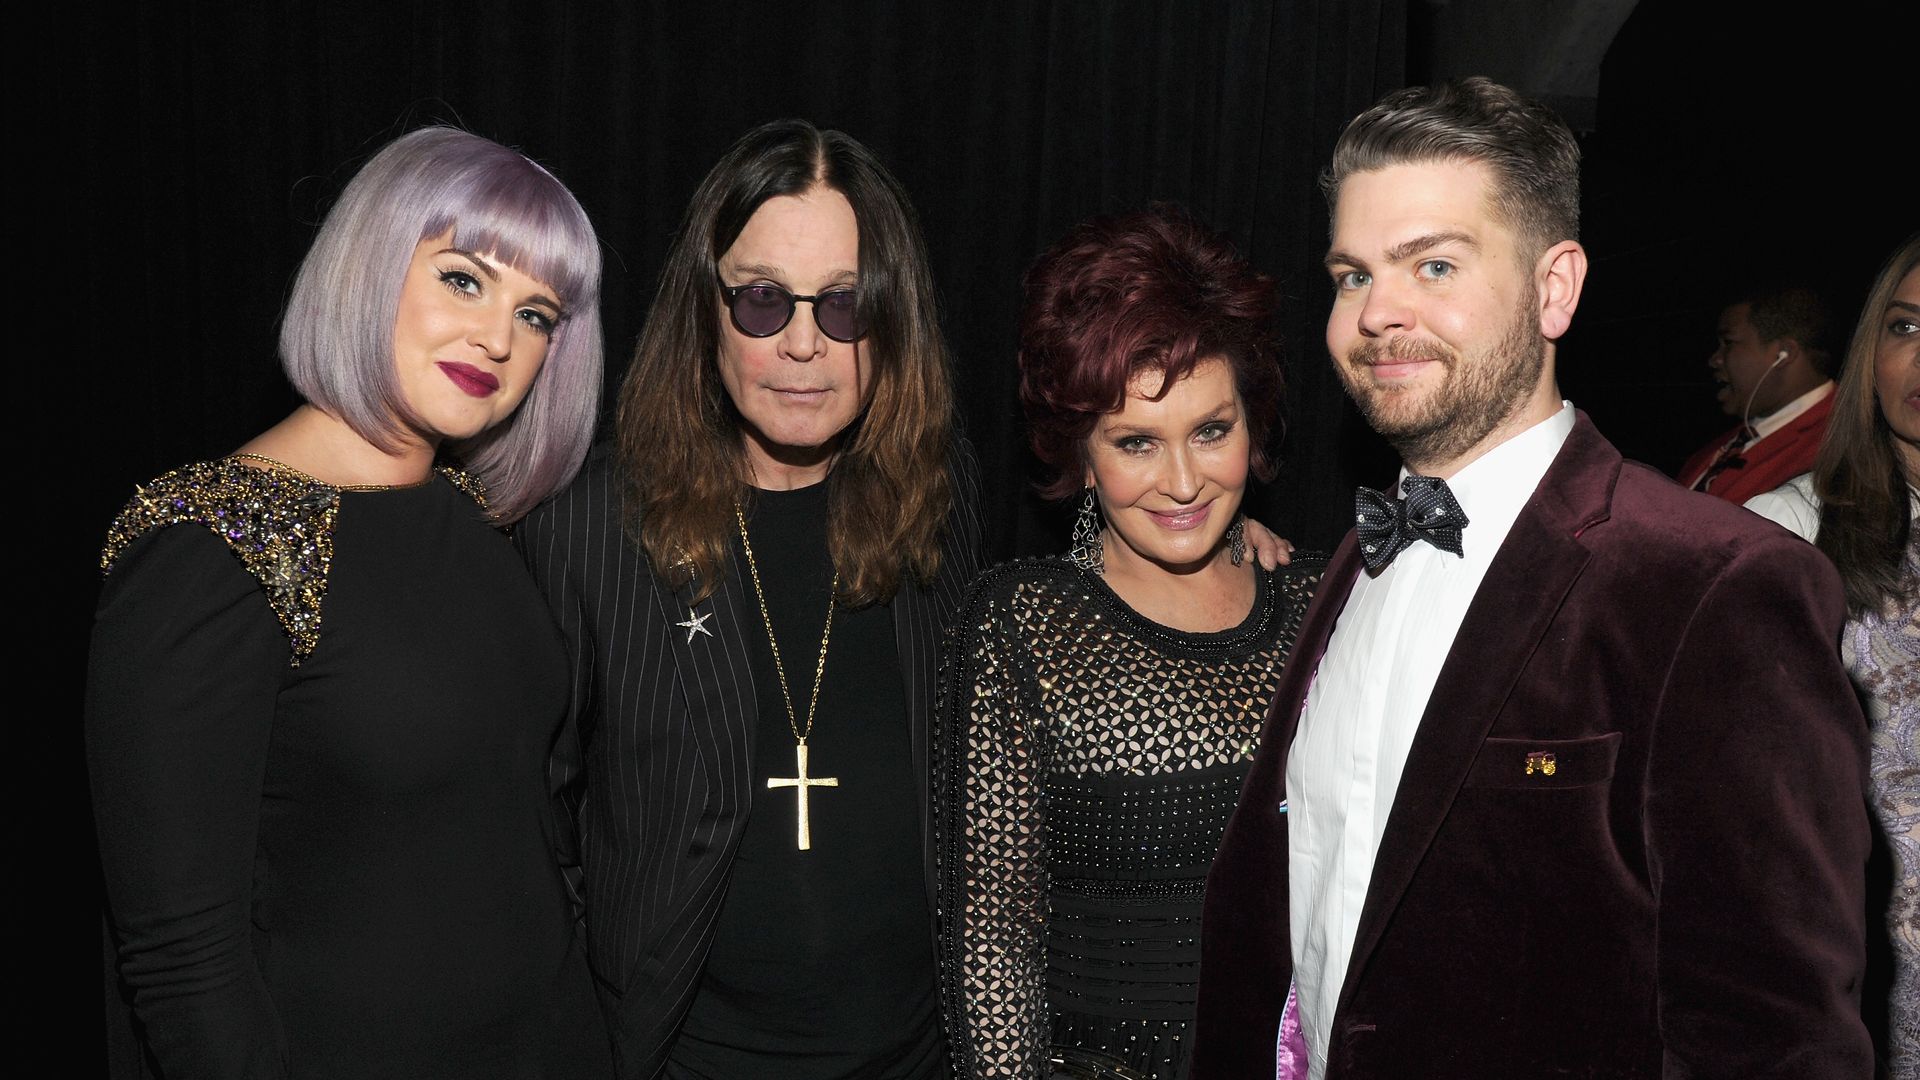 Kelly Osbourne, Ozzy Osbourne, Sharon Osbourne and Jack Osbourne attend the 56th GRAMMY Awards at Staples Center on January 26, 2014 in Los Angeles, California.